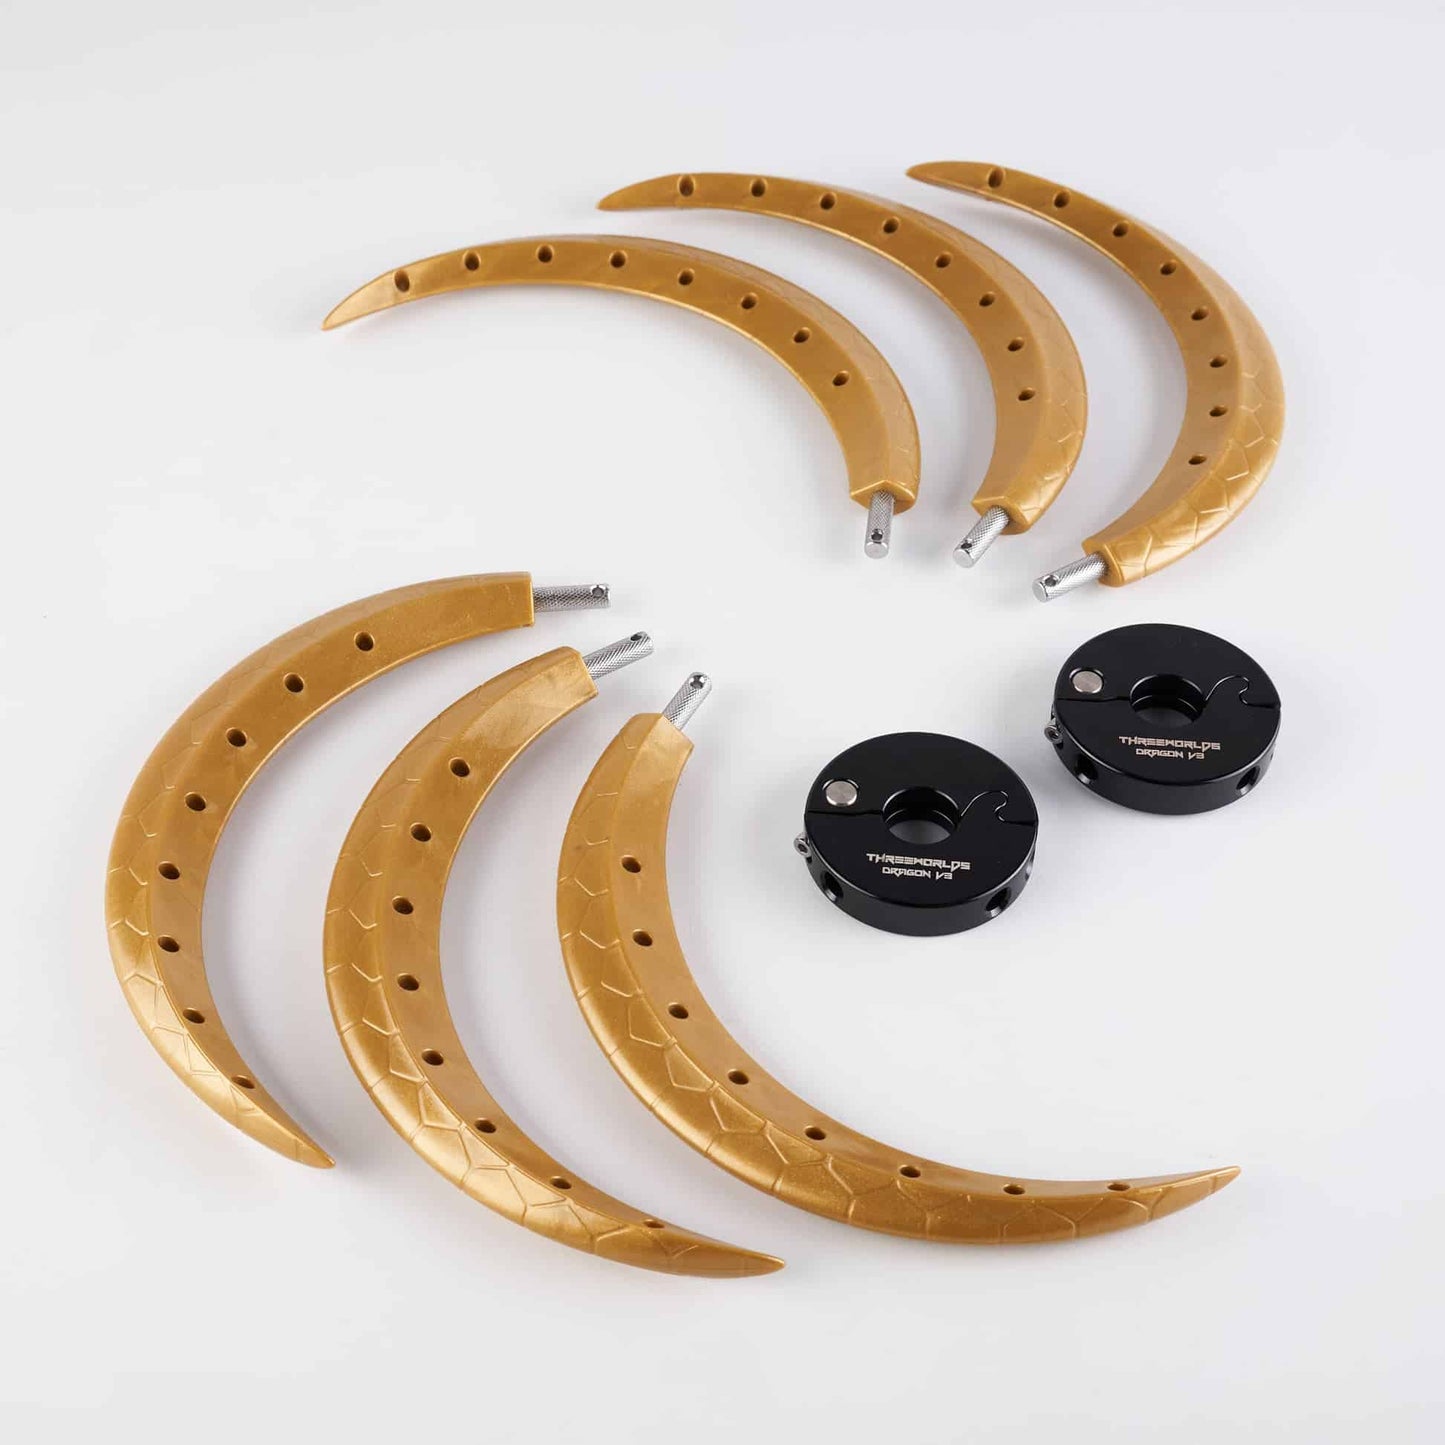 Dragon Staff Spiral Claw Adapter Kit